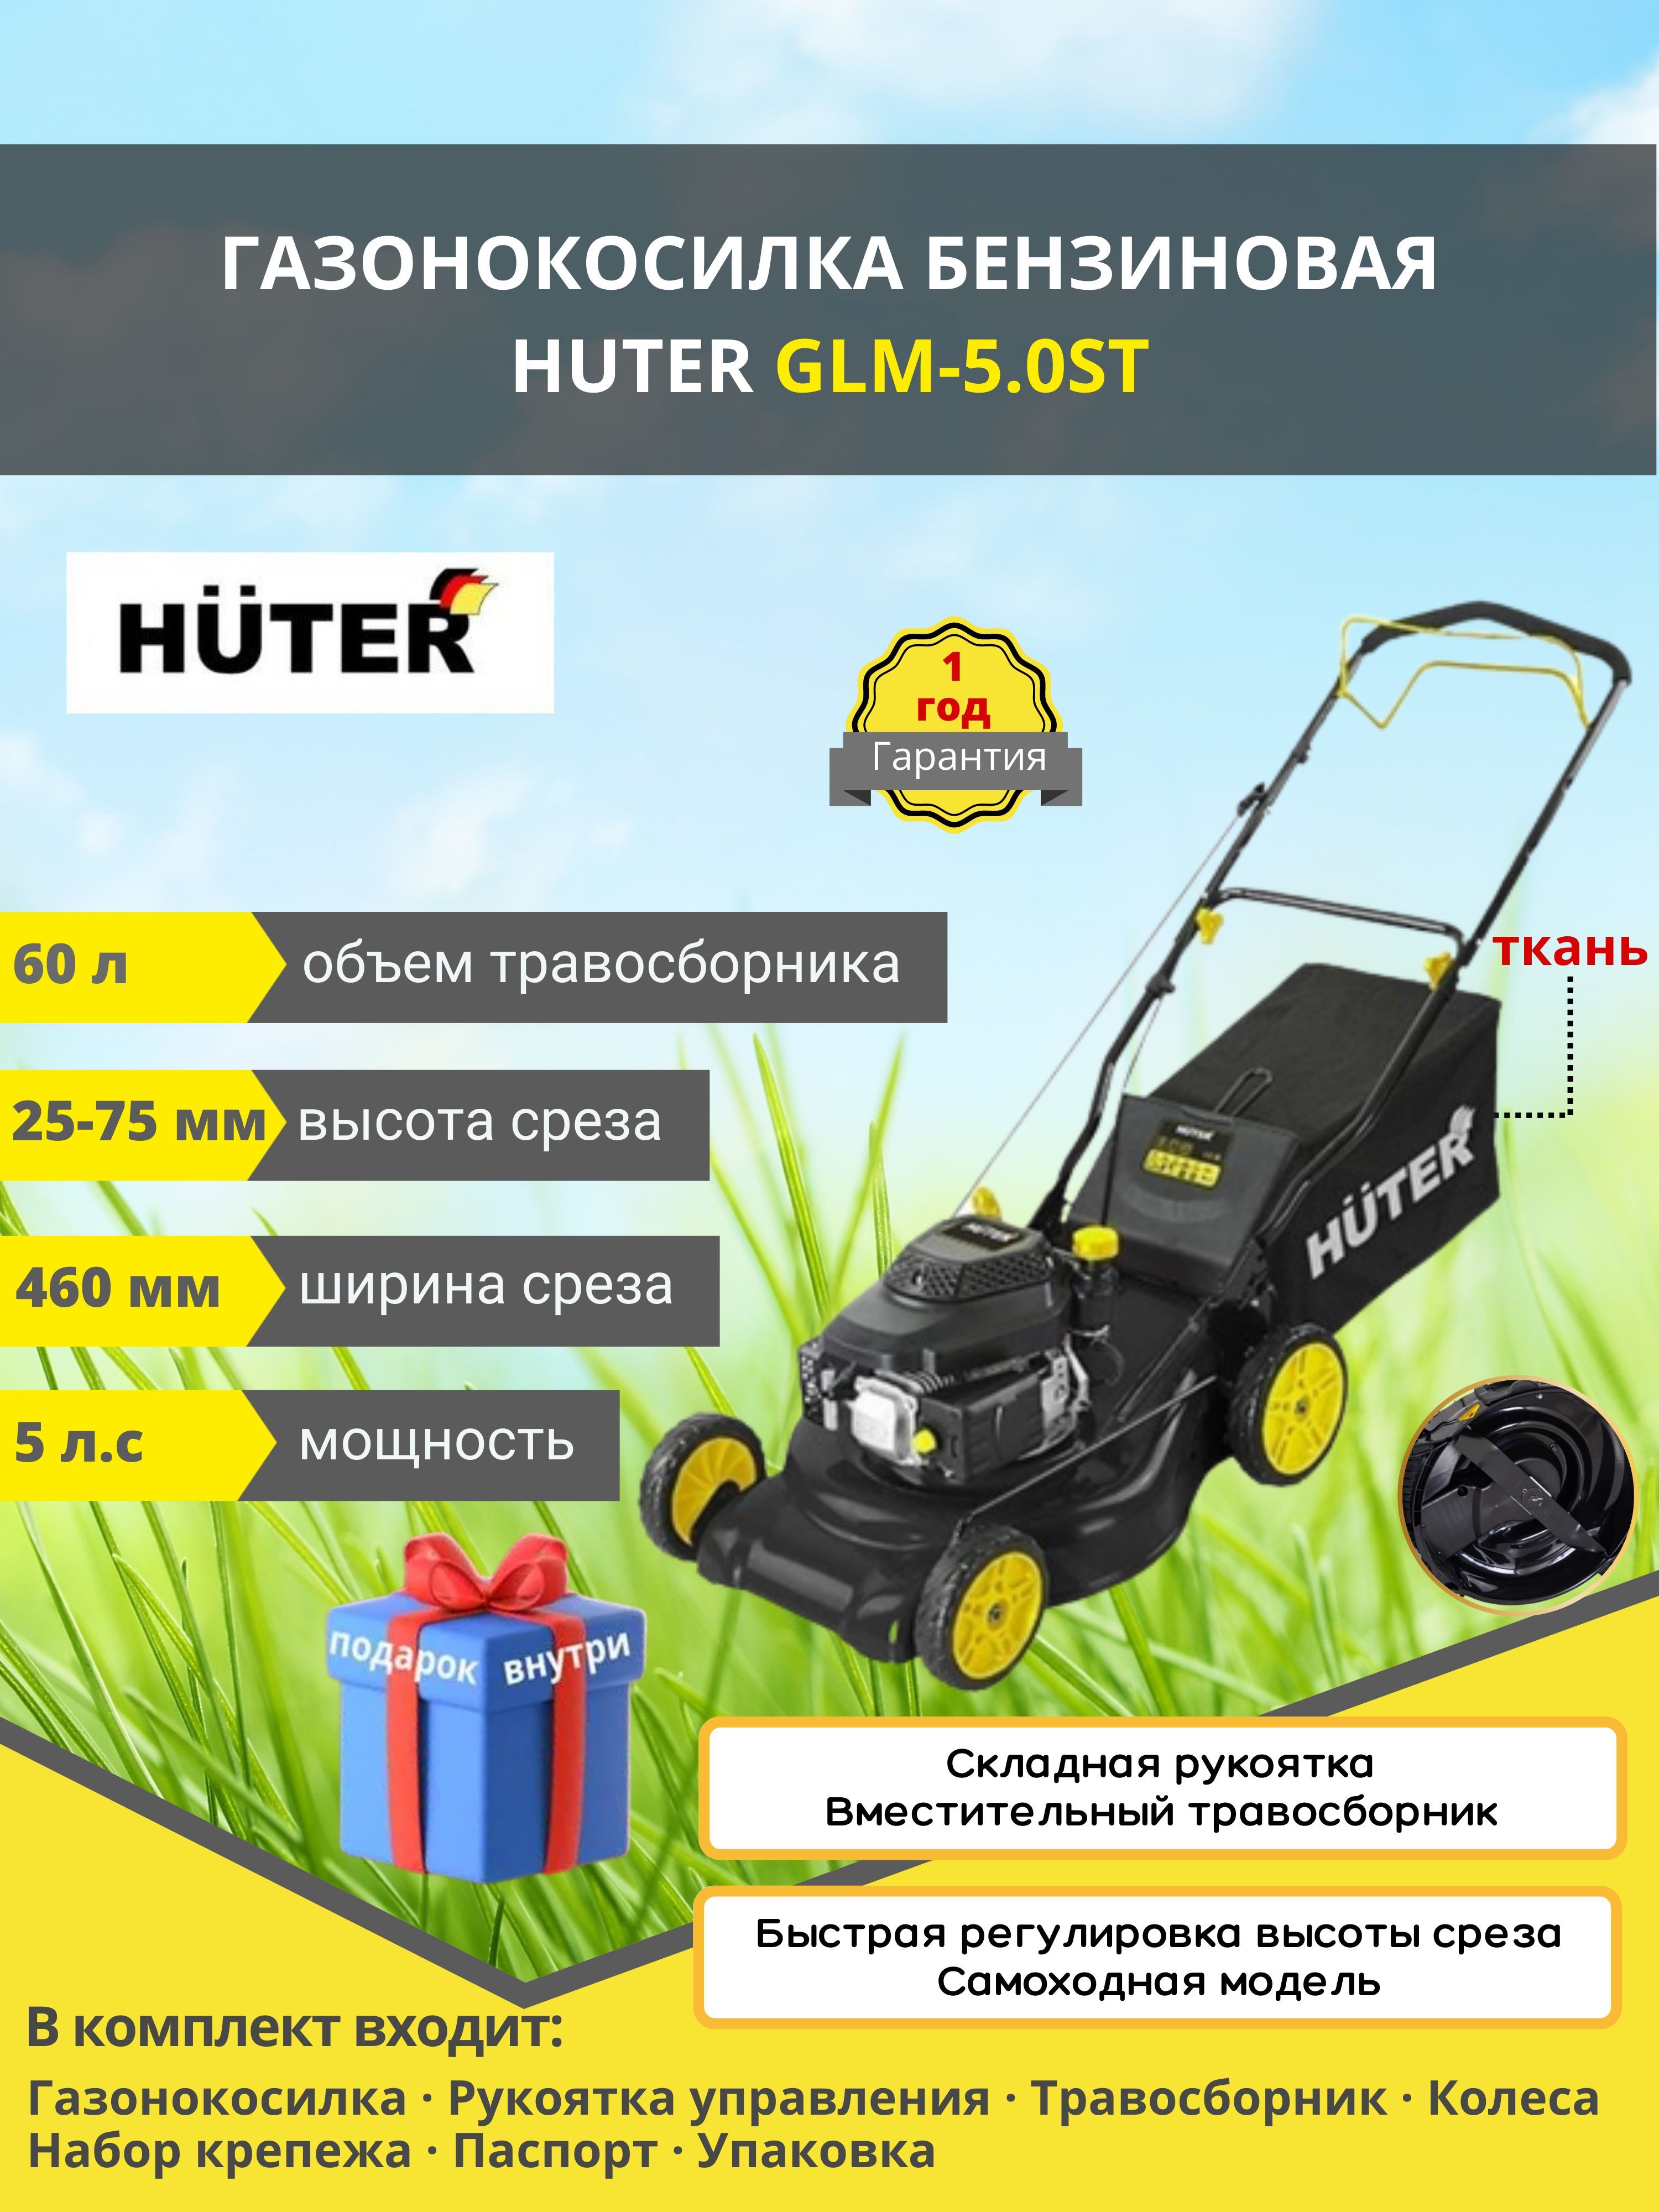 Газонокосилка бензиновая huter glm 5.0 st. Huter GLM-5.0 St. GLM-5.0 St. Колесо для газонокосилки Huter GLM-5.0St. Huter GLM-5.0 St, 5 л.с., 46 см цены.